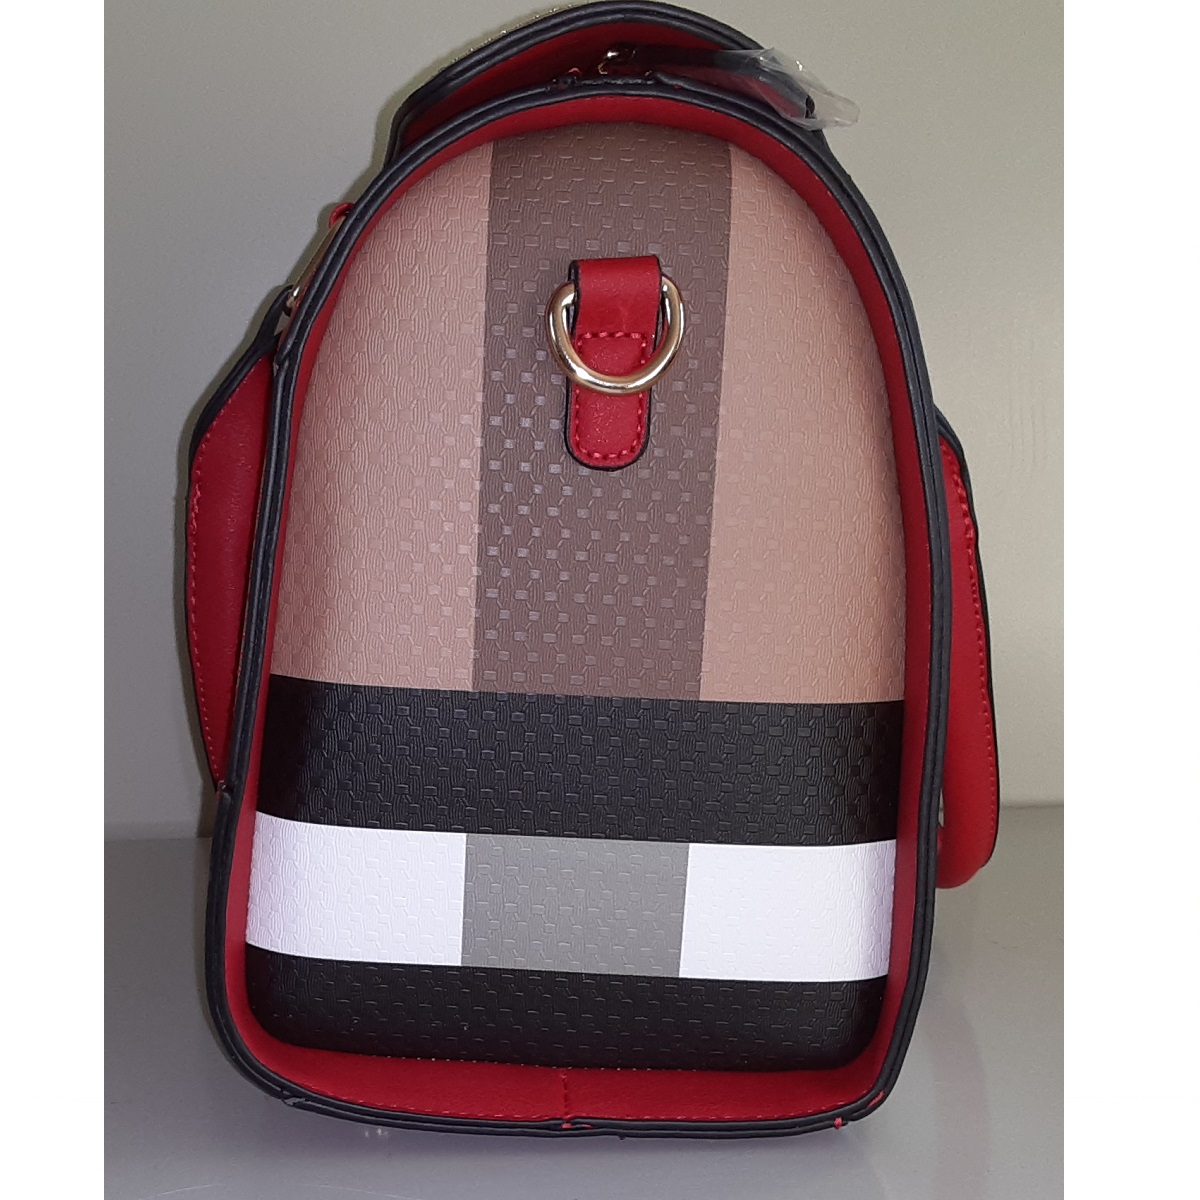 Red & Brown Plaid Satchel Handbag - 2-Piece Set Vegan Leather handbag with smaller companion bag